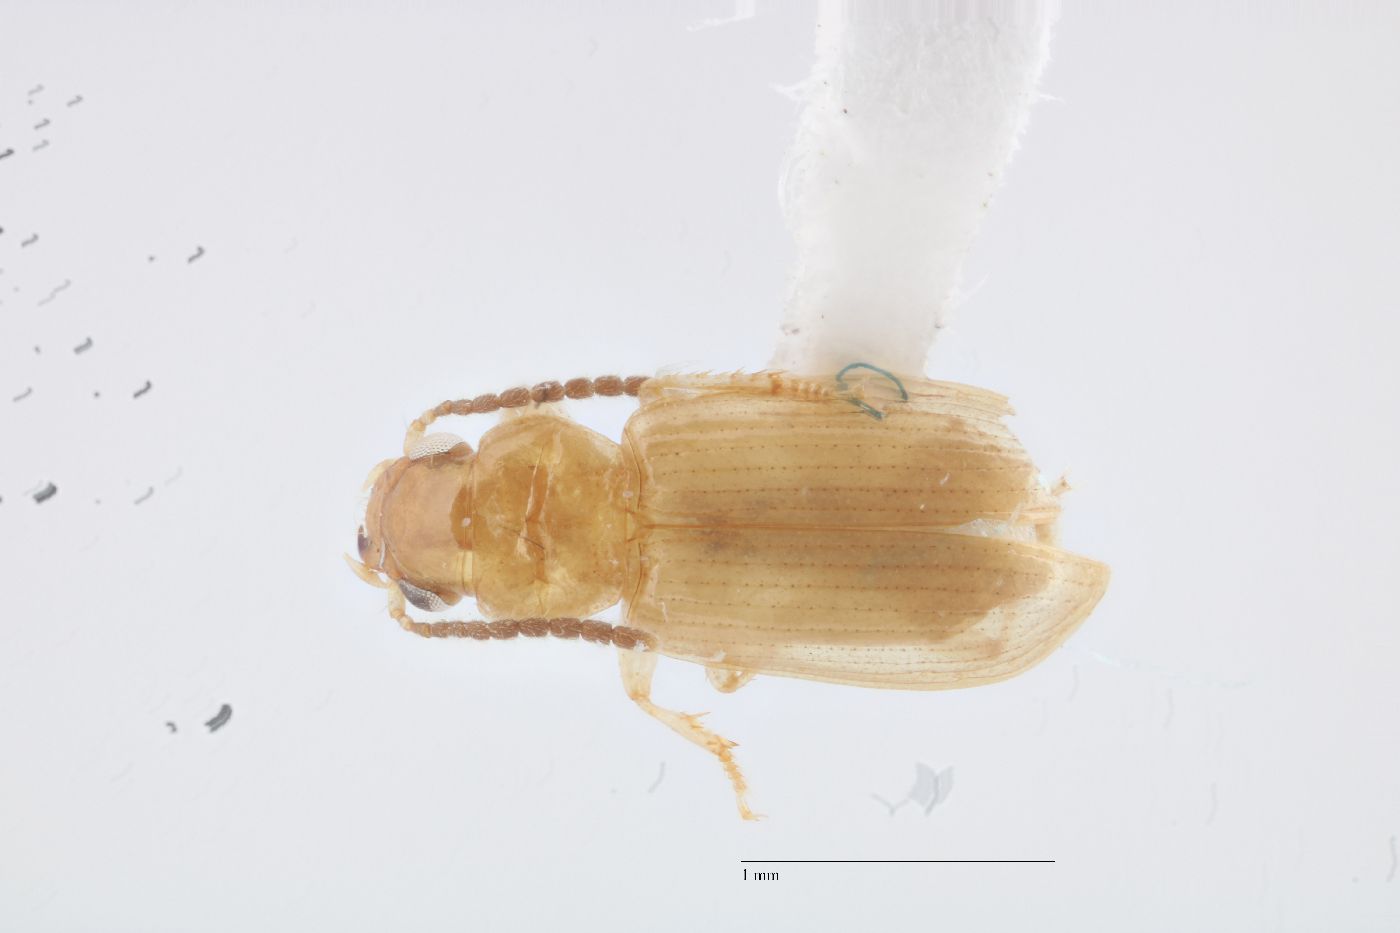 Bradycellus (Stenocellus) image